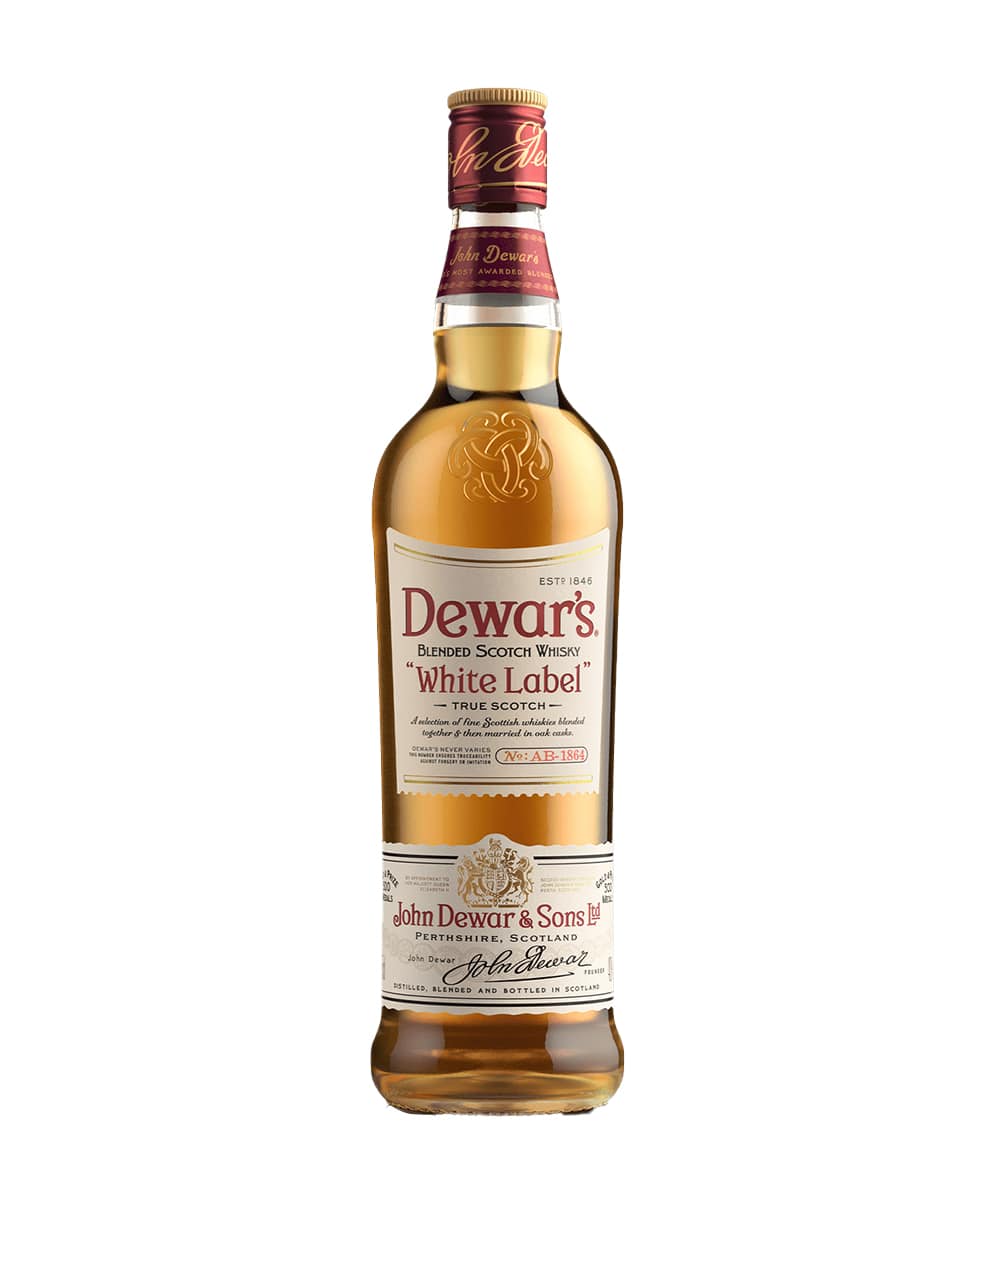 DEWAR'S White Label Scotch Whisky 1.75L